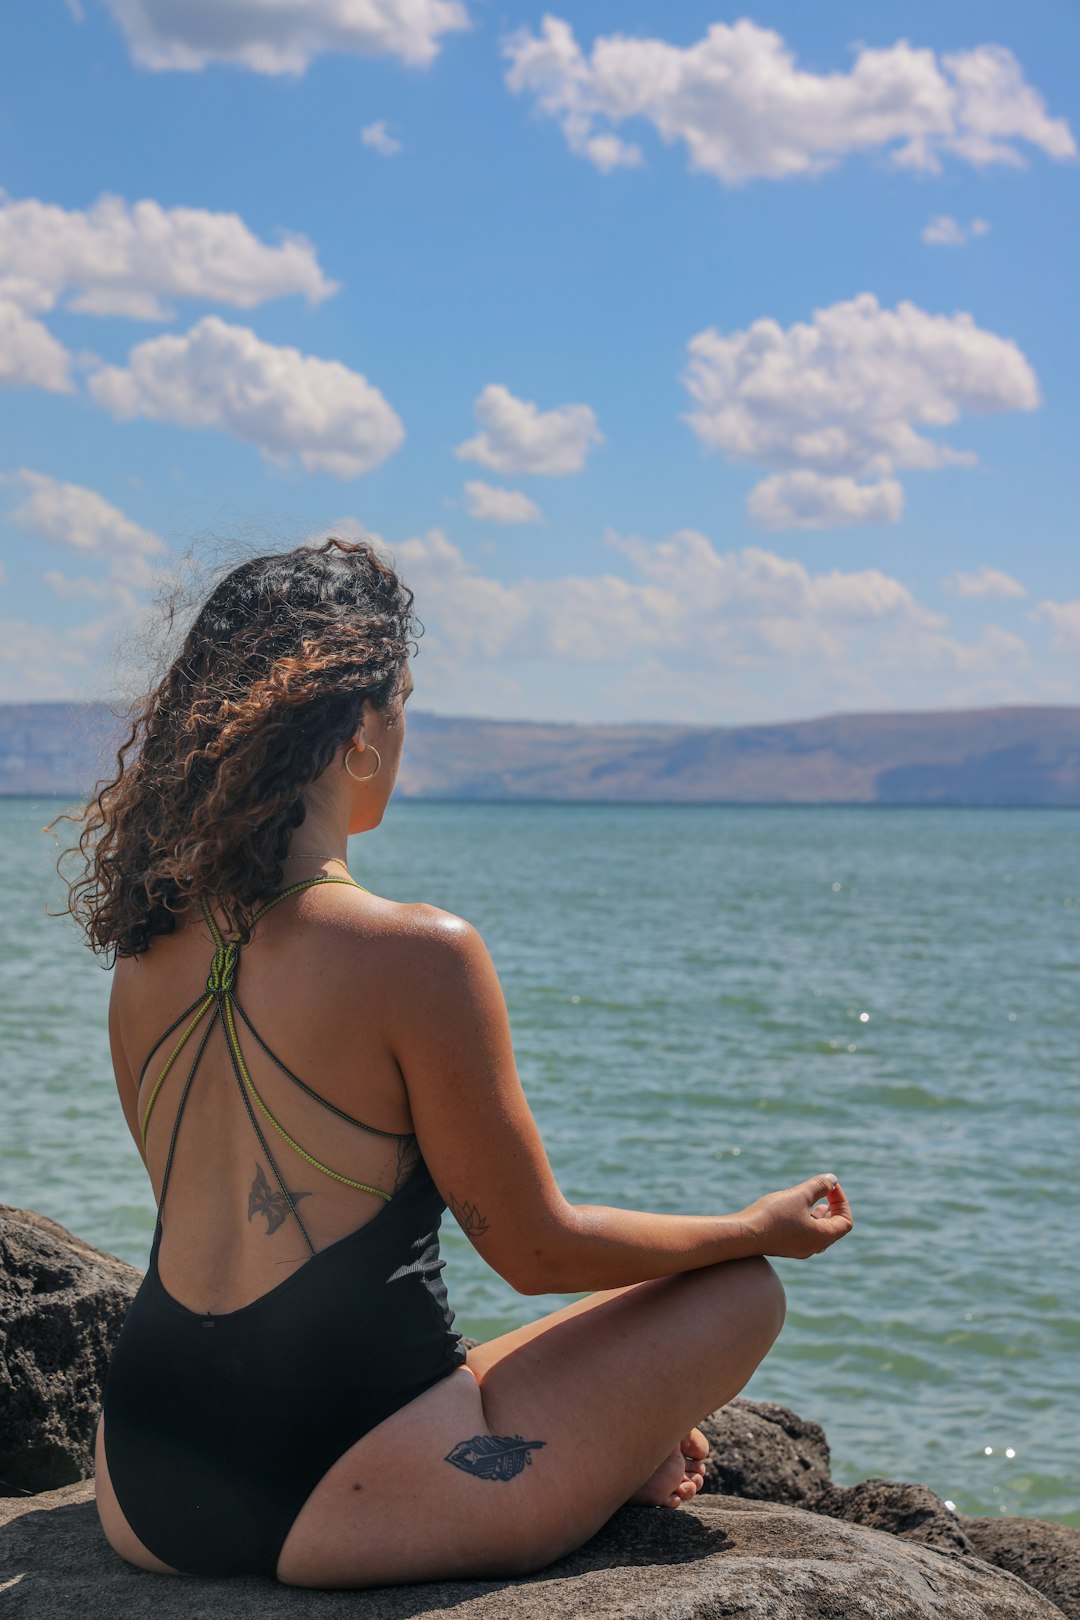 travelers stories about Beach in Sea of Galilee, Israel